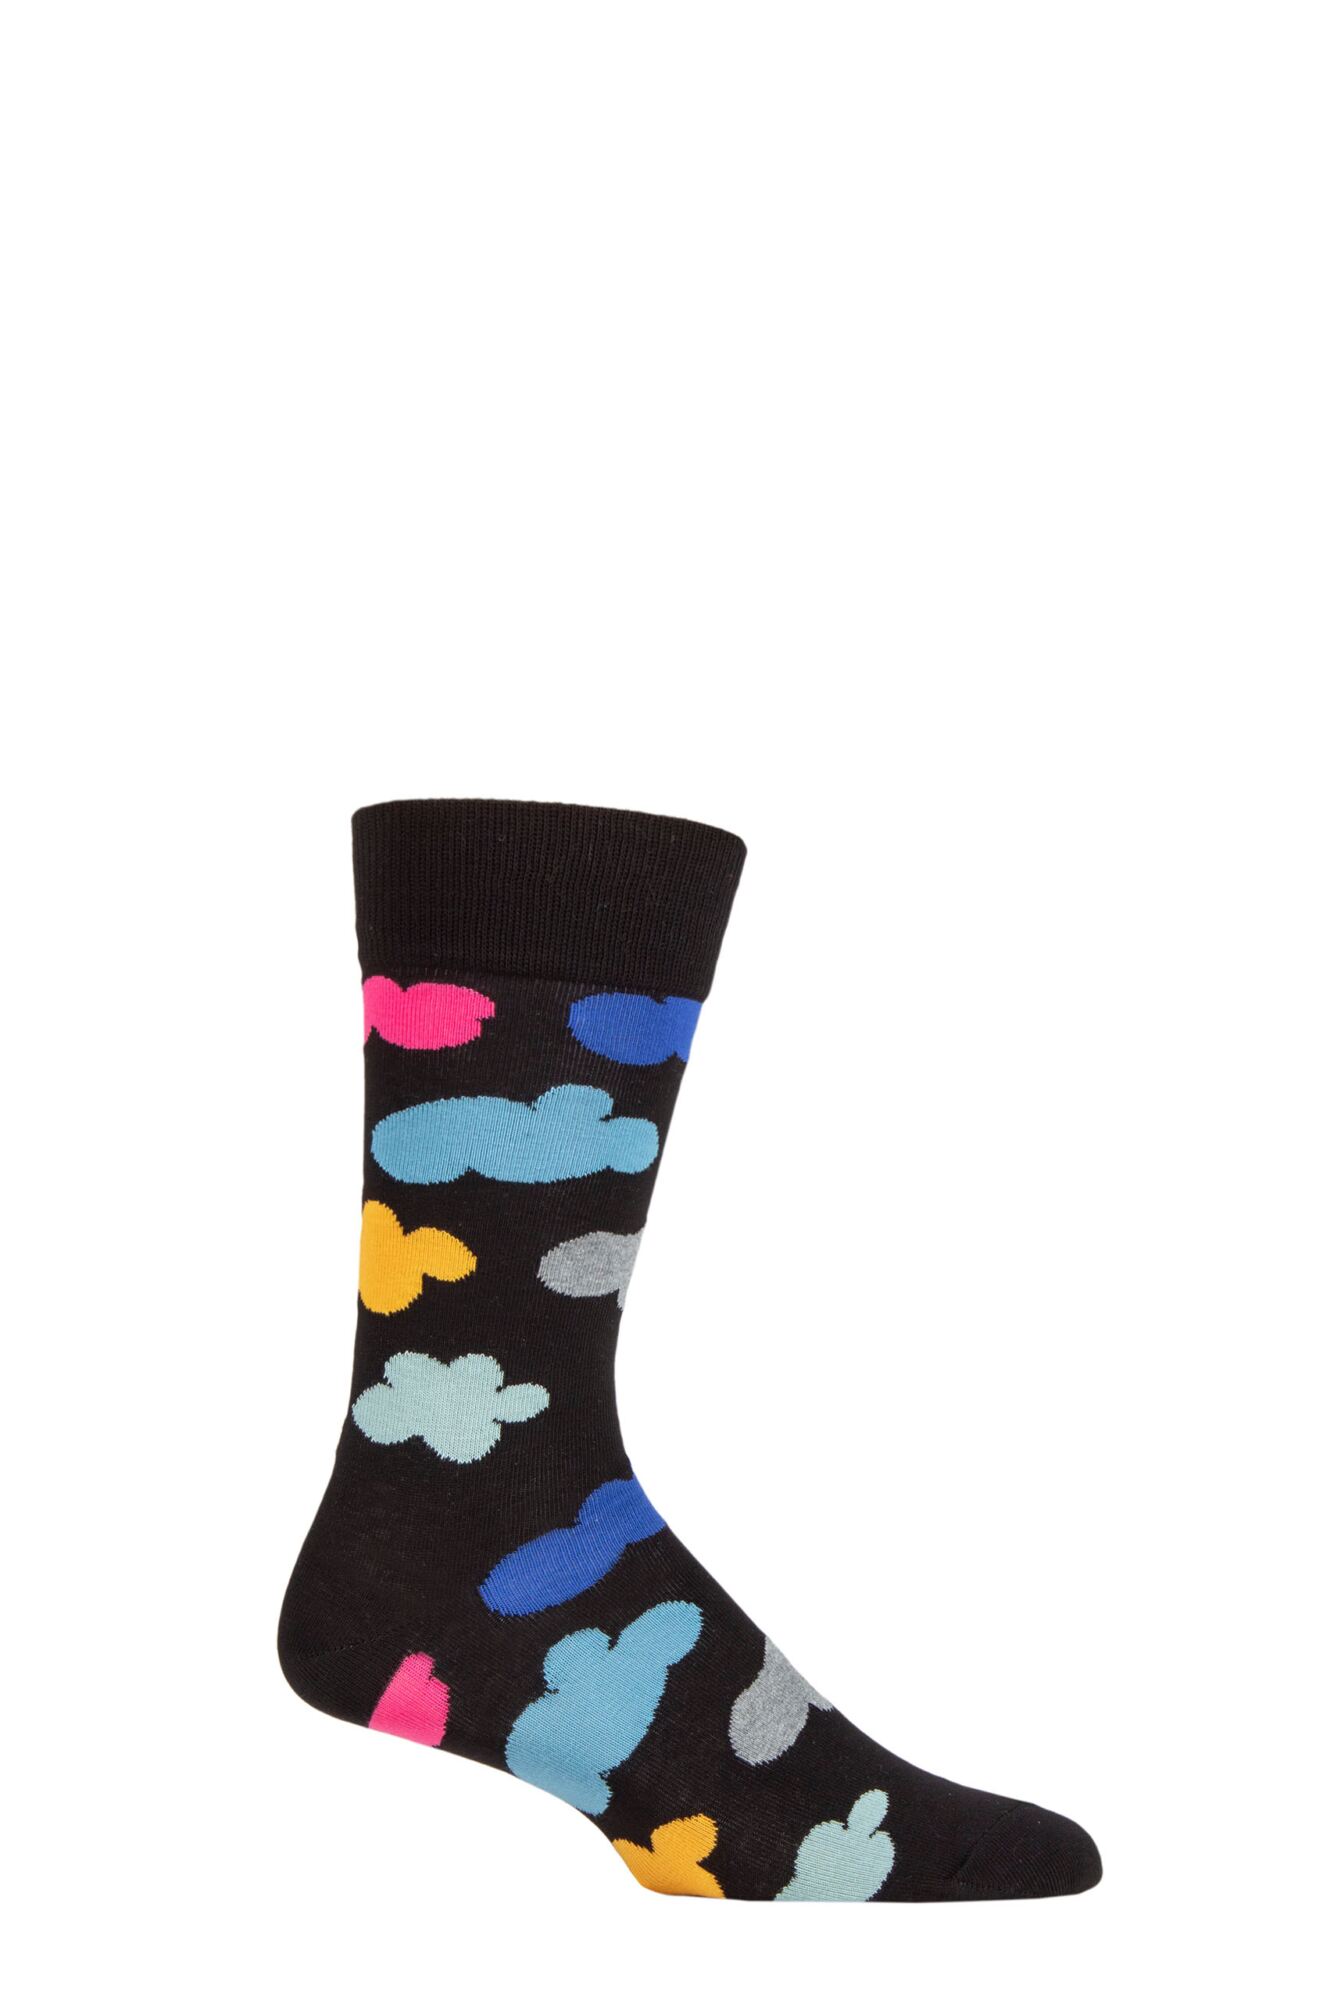 Happy Socks 1 Pair Cloudy Socks from SockShop